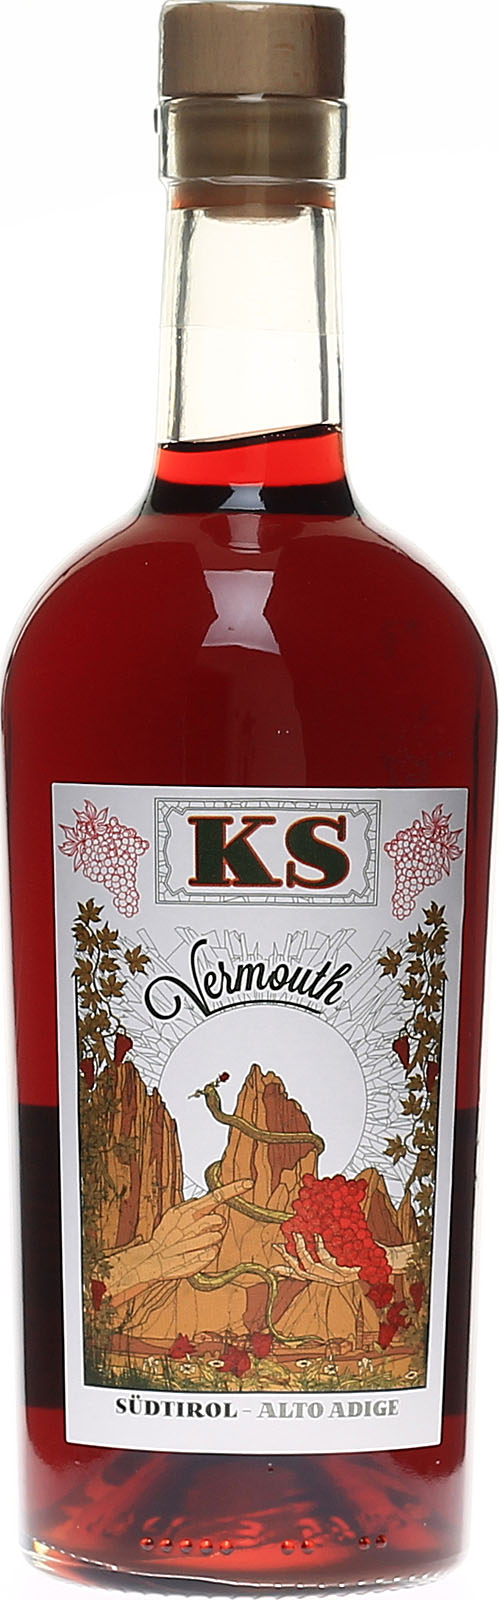 Roner KS Vermouth rot, hervorragender roter Vermouth